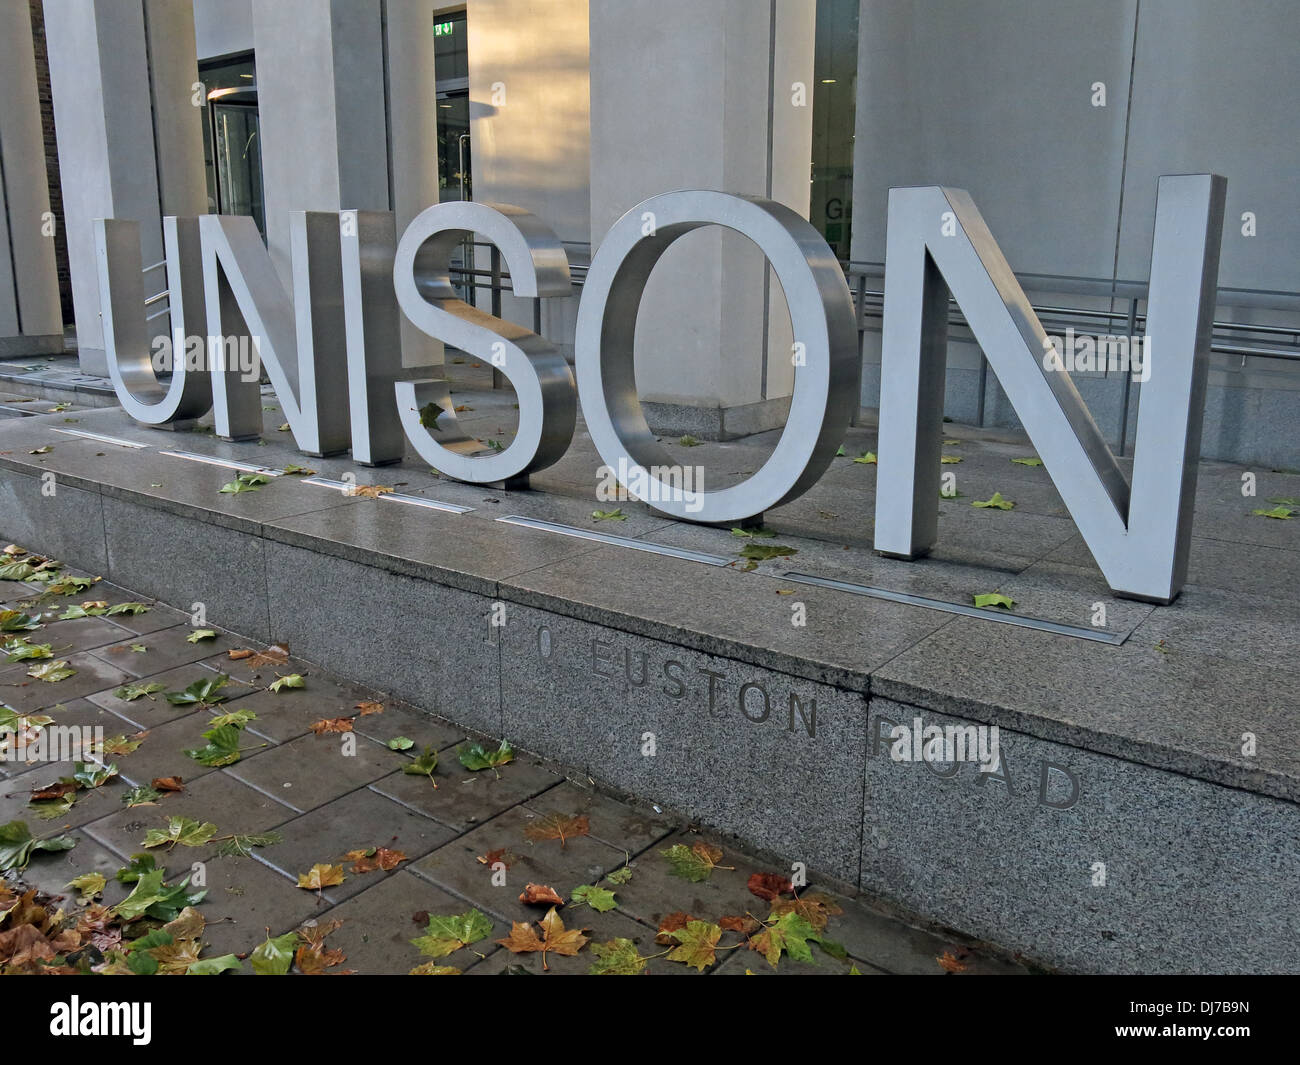 Immeuble syndical Unison, 130 Euston Road, Londres, Angleterre, Royaume-Uni Banque D'Images